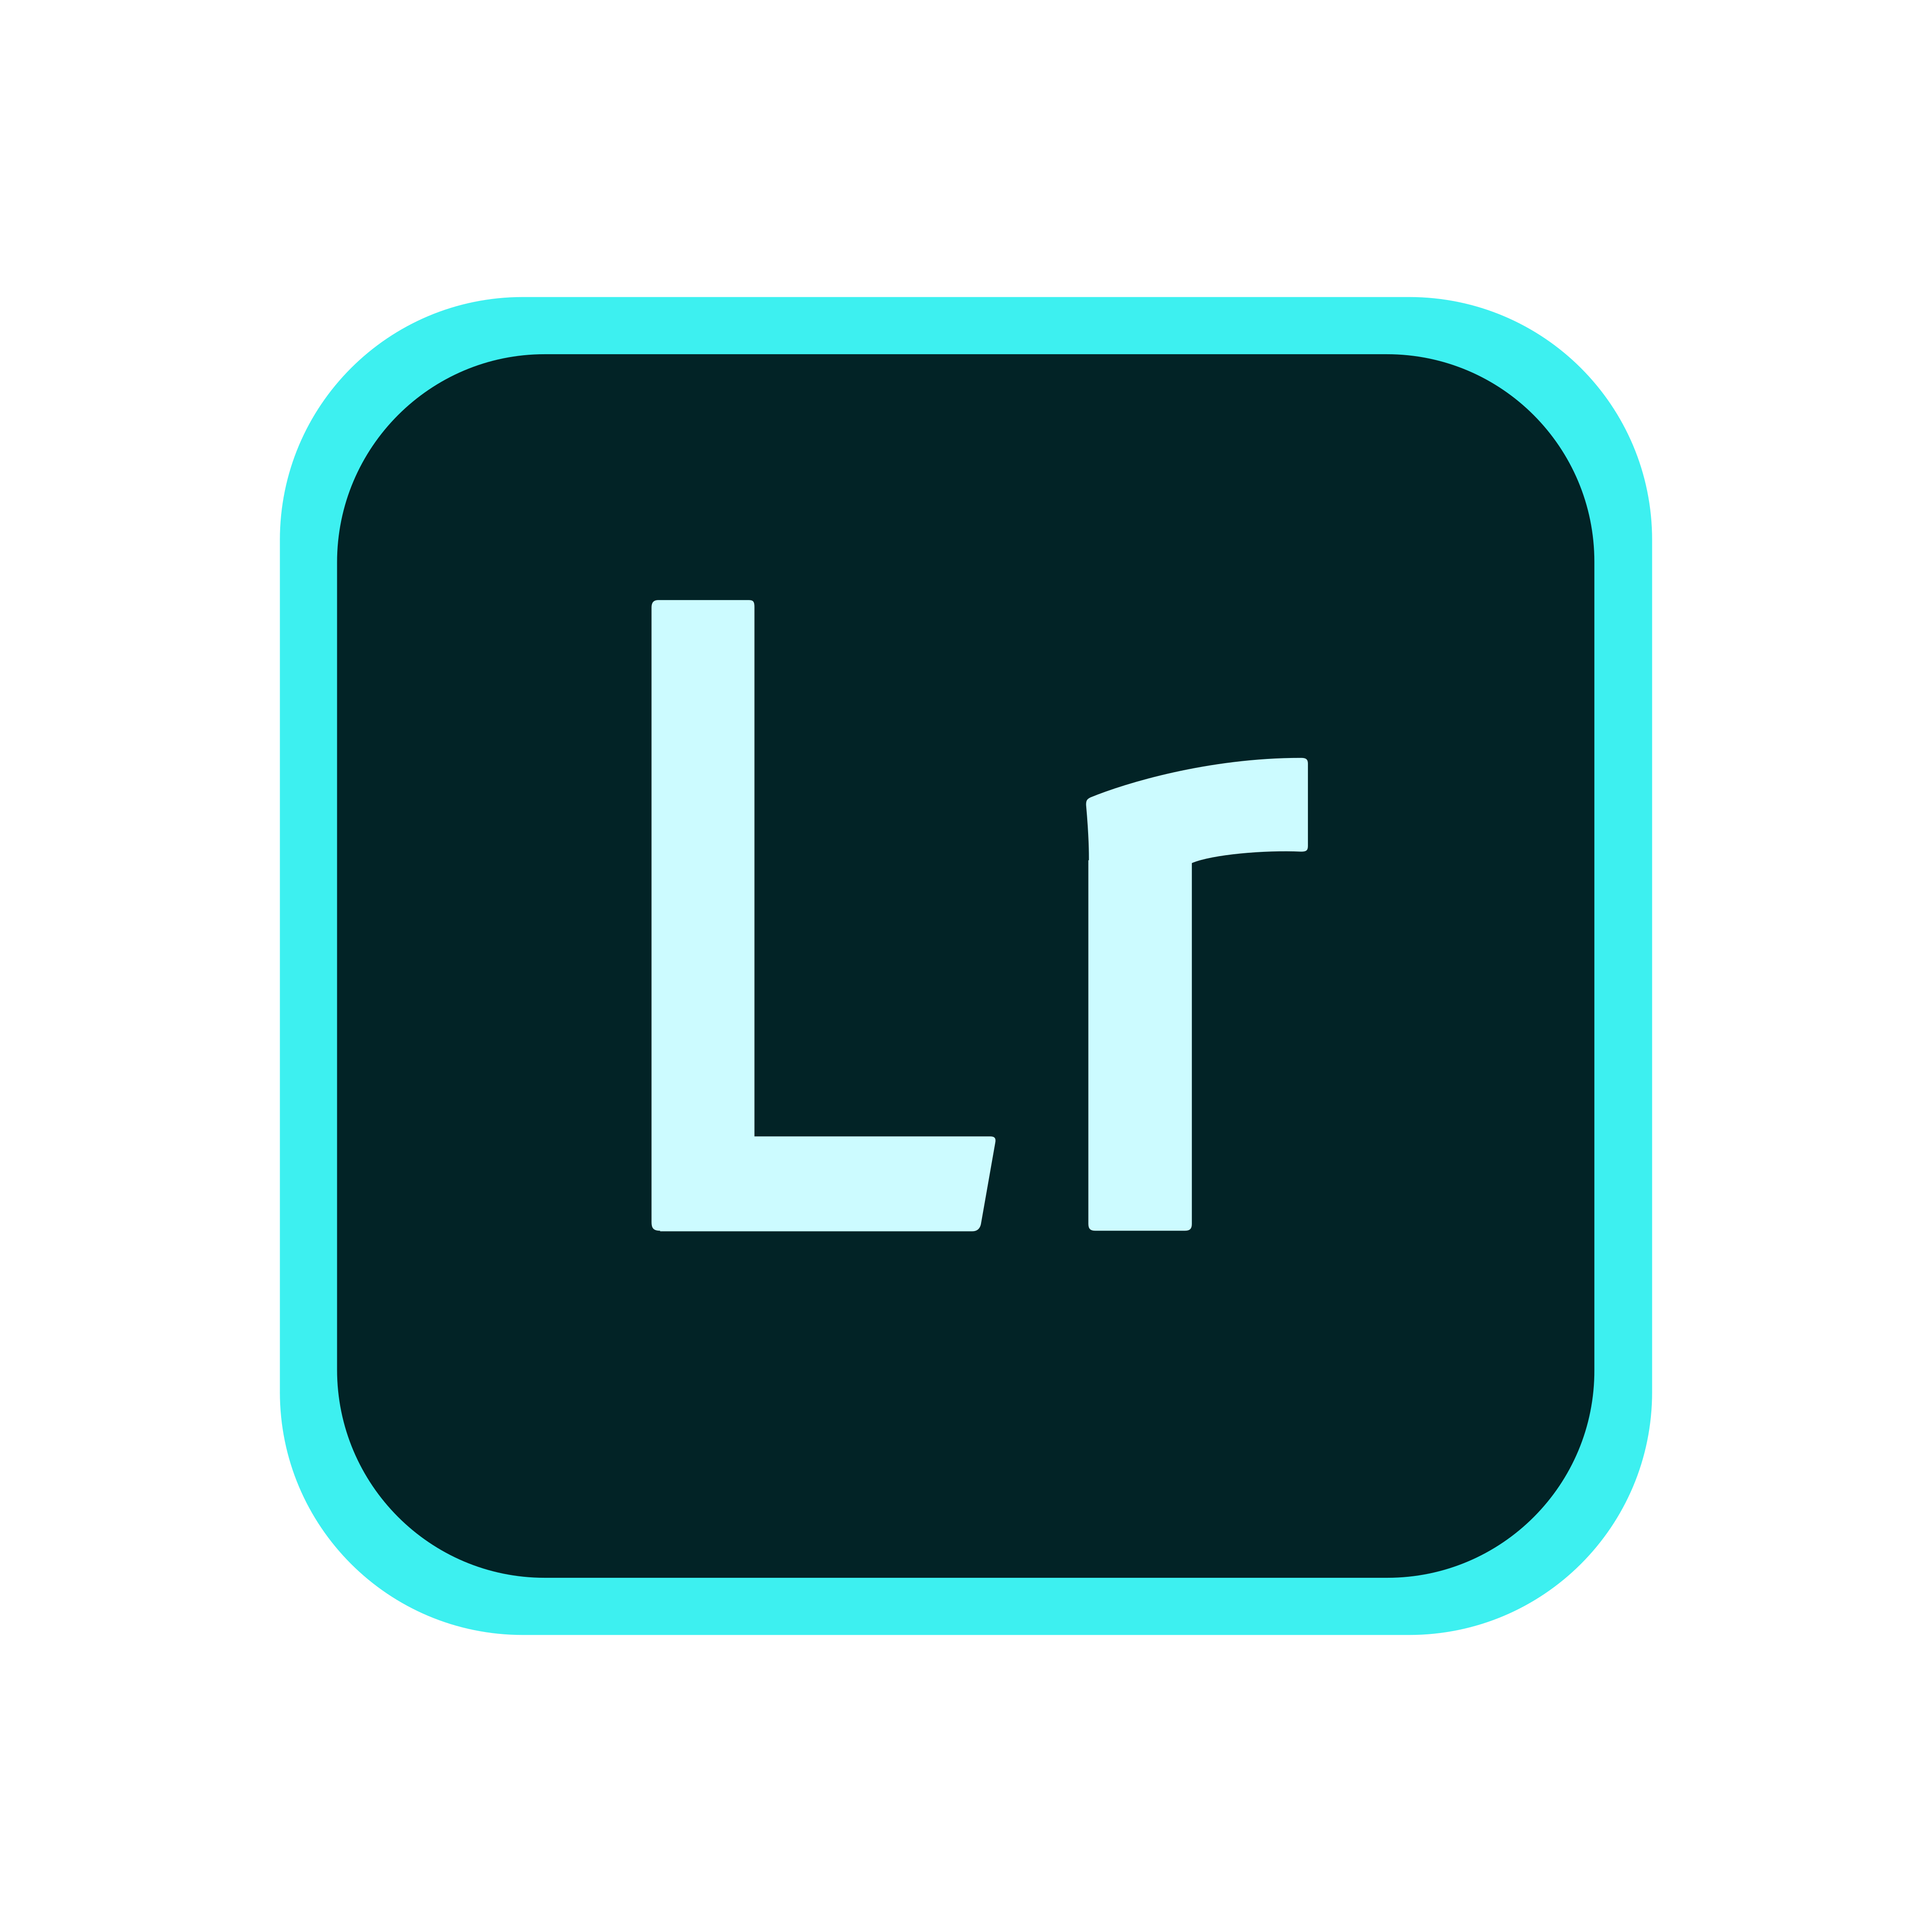 lightroom logo 0 - Adobe Lightroom Logo